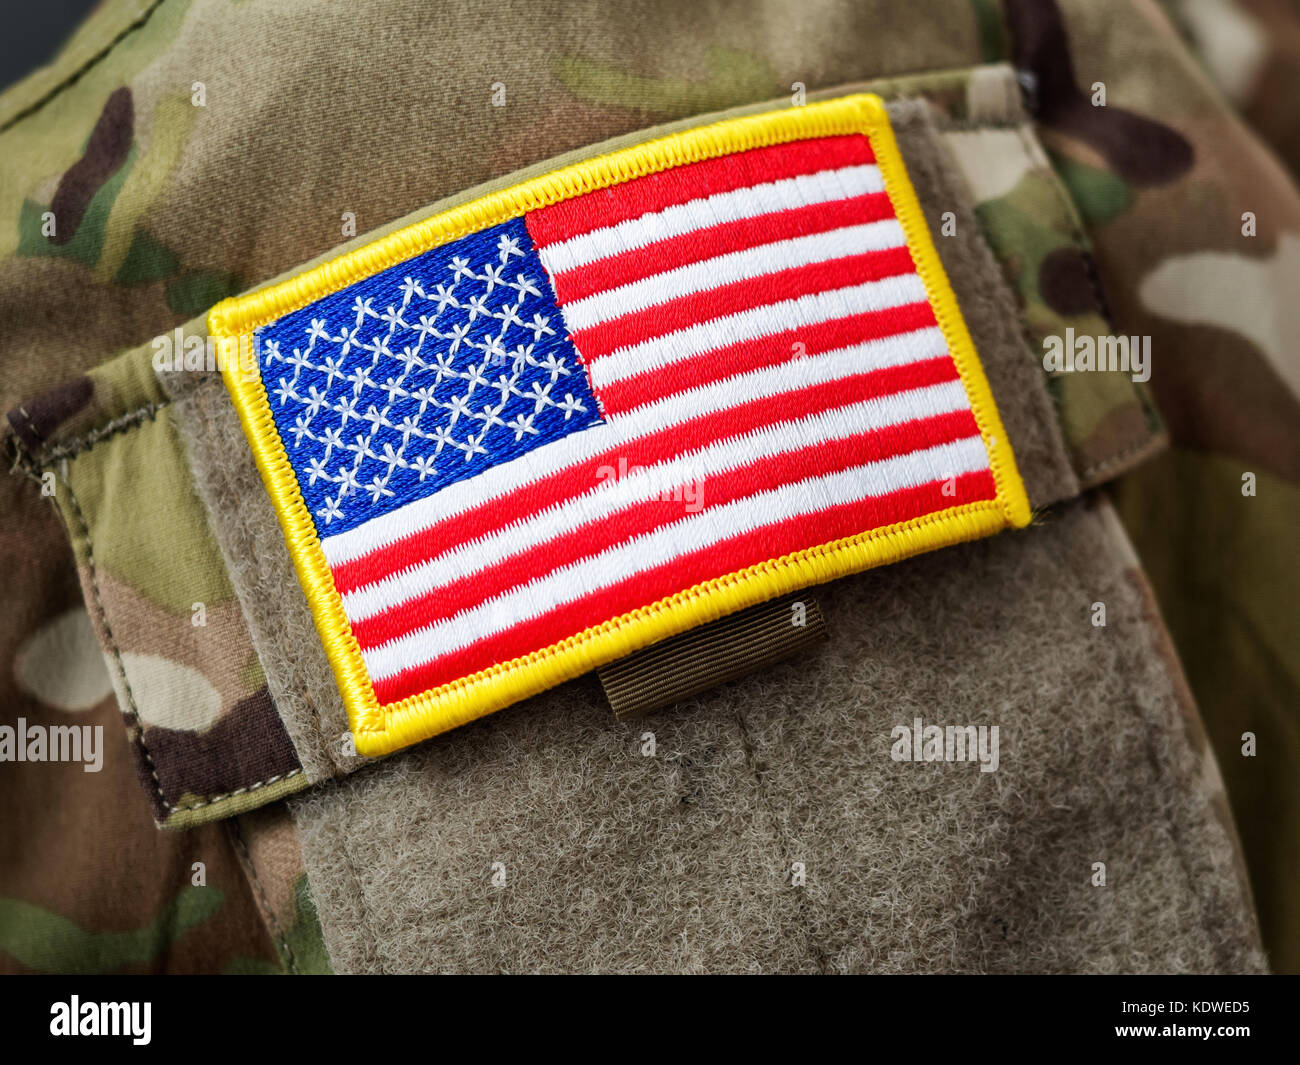 USA flag patch on soldier uniform Stock Photo by ©PondShots 2352734